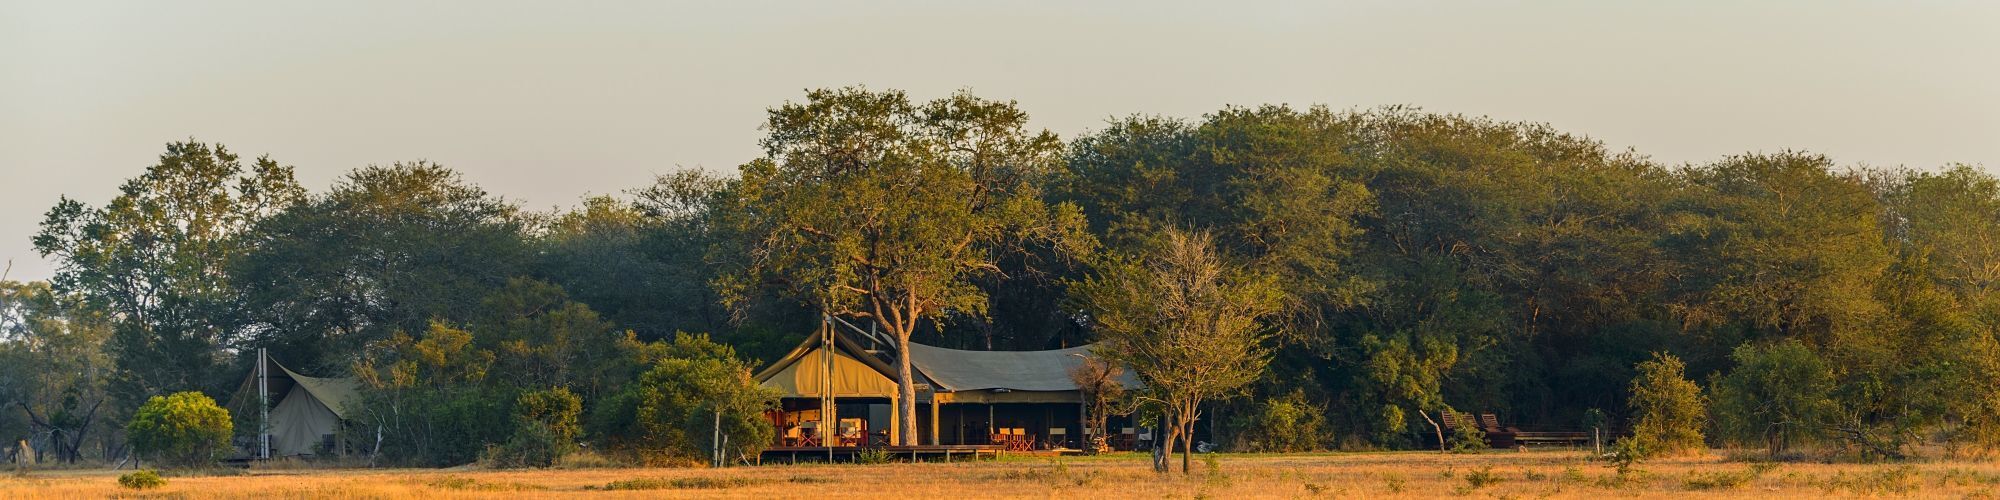 Plains Camp Home of Rhino Walking Safaris, Banner